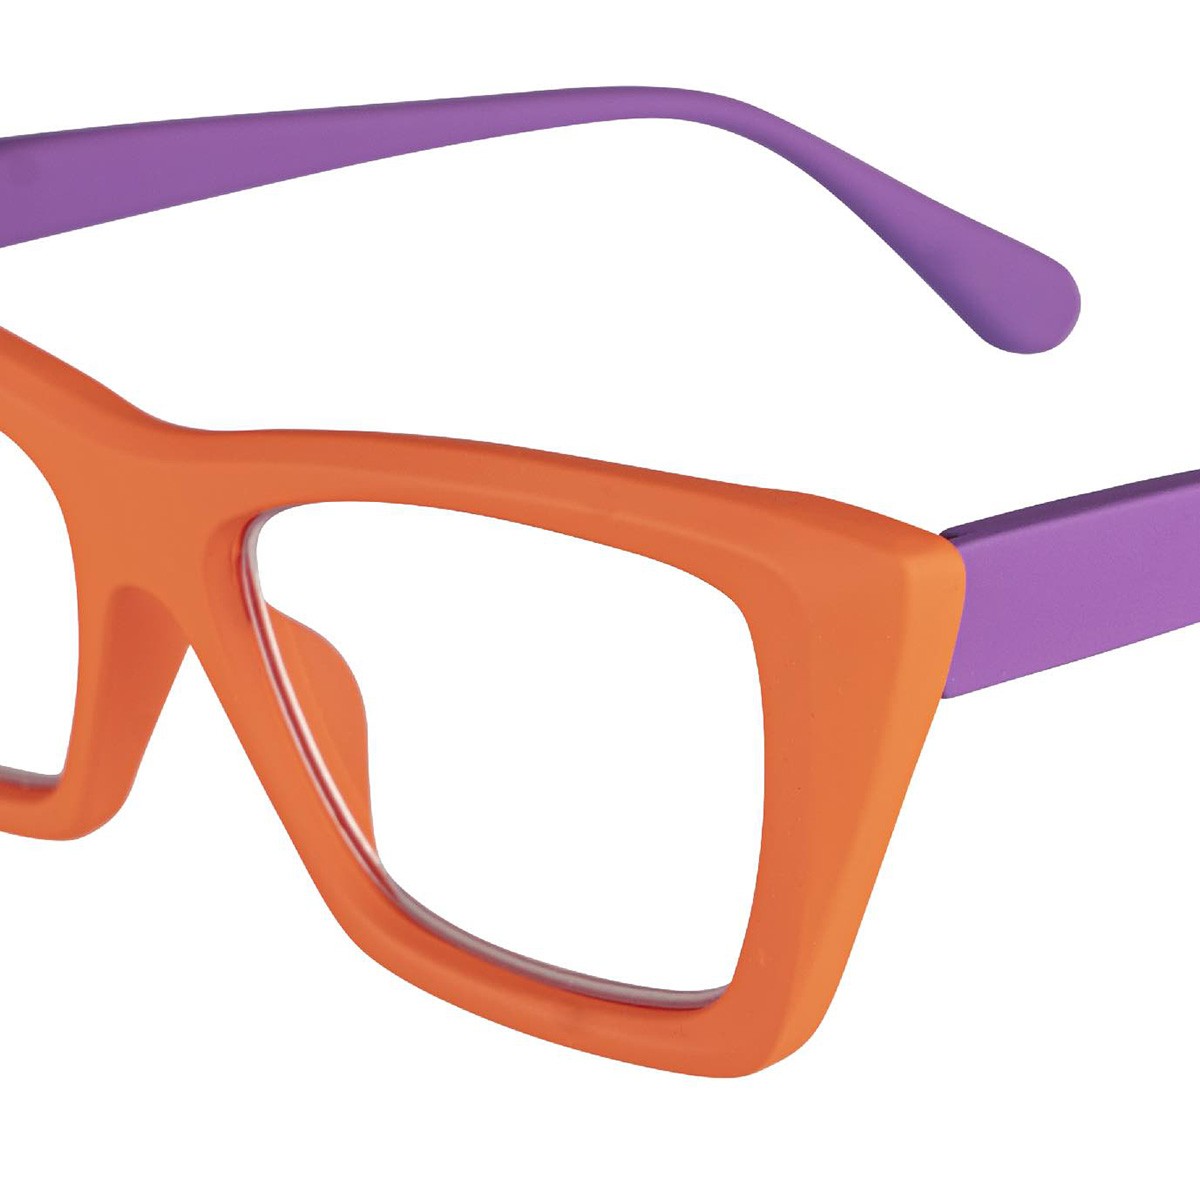 Iaview gafa de presbicia TOPY naranja-purpura +3,50